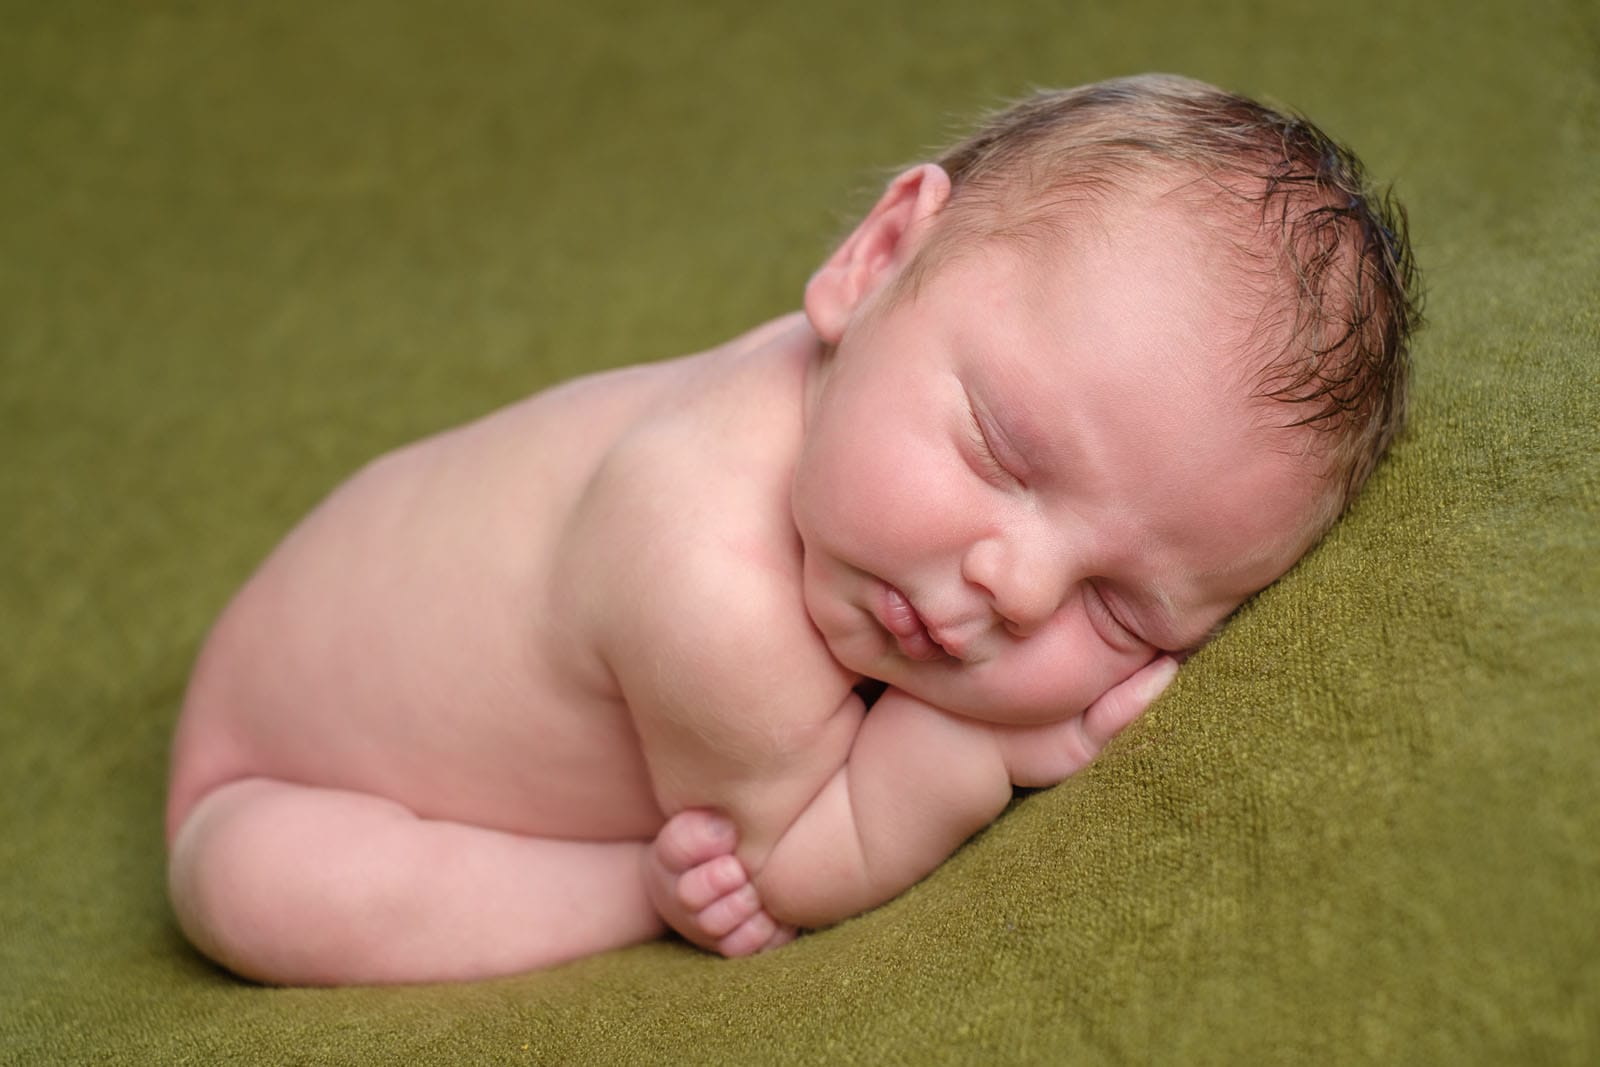 newborn photography - froggy pose variation